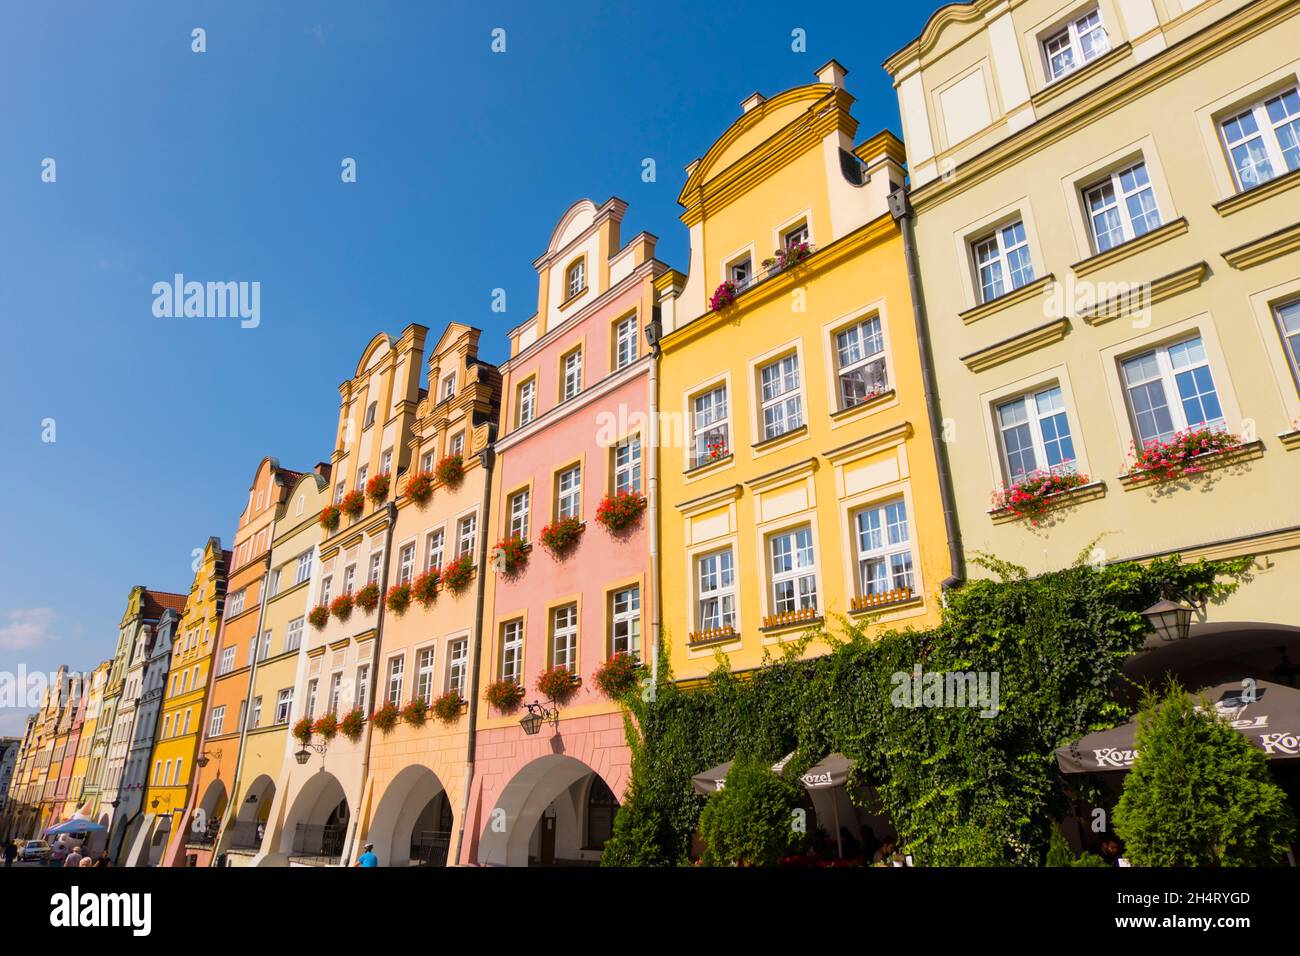 Fachadas de casas, Rynek Jeleniogórski, plaza principal, Jelenia Gora, Polonia Foto de stock